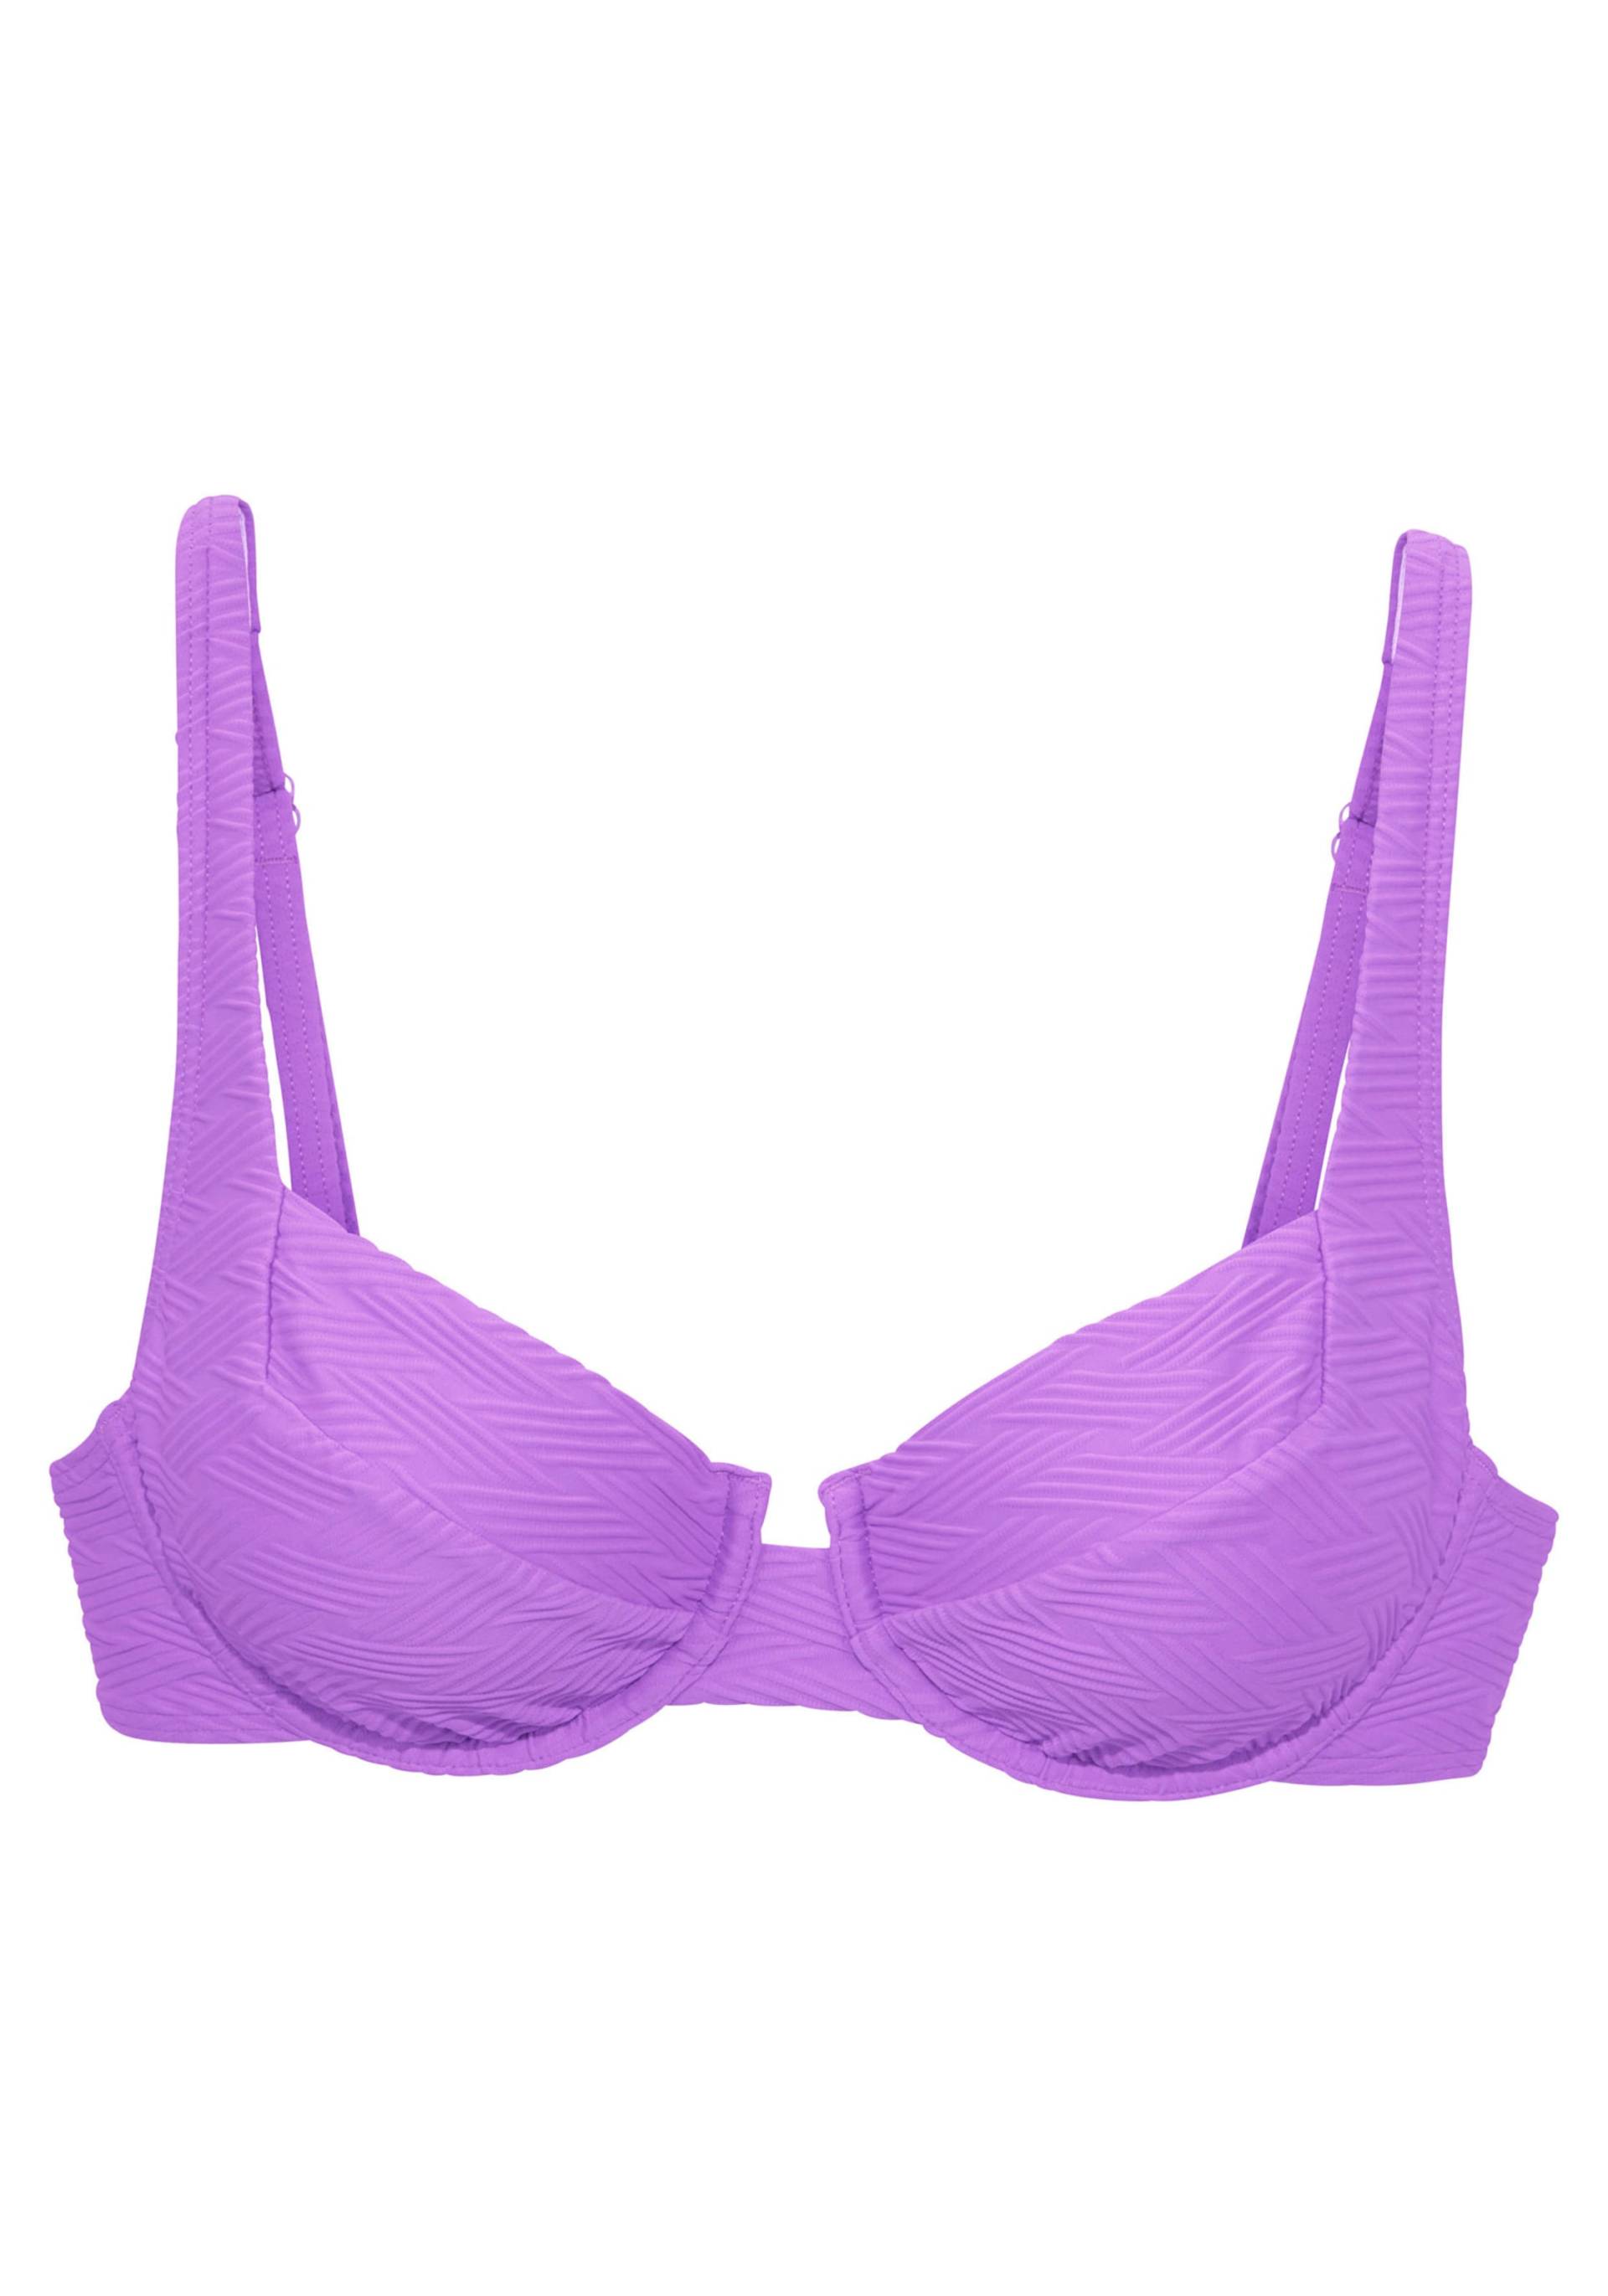 Bügel-Bikini-Top in lila von Sunseeker